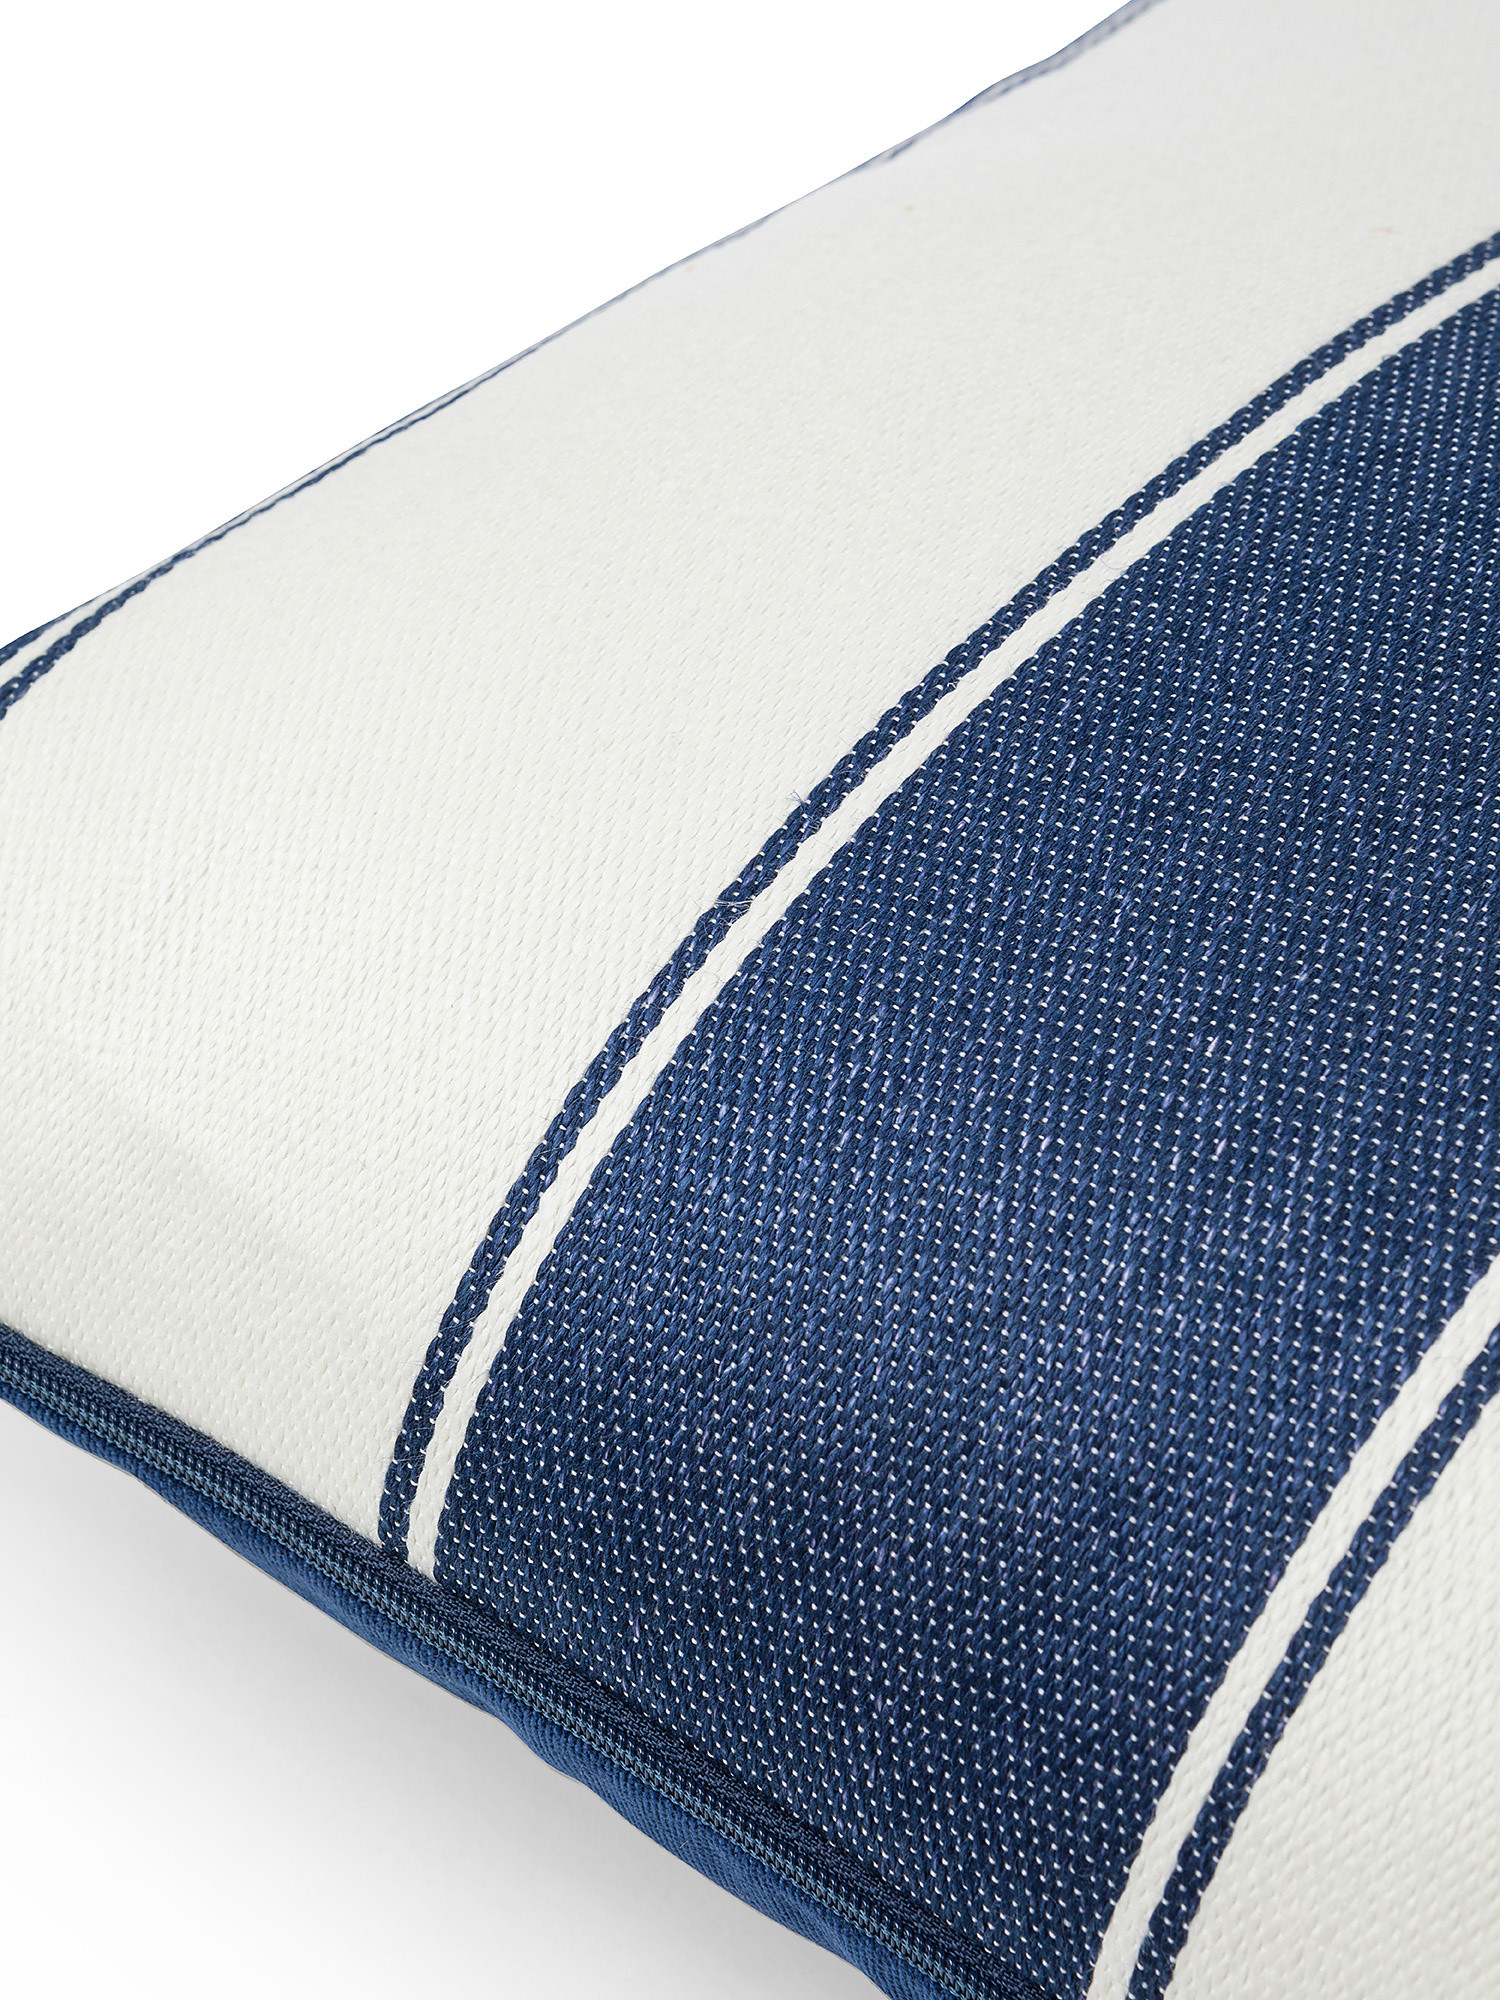 Cuscino tessuto motivo a righe 35x55cm, Blu, large image number 2